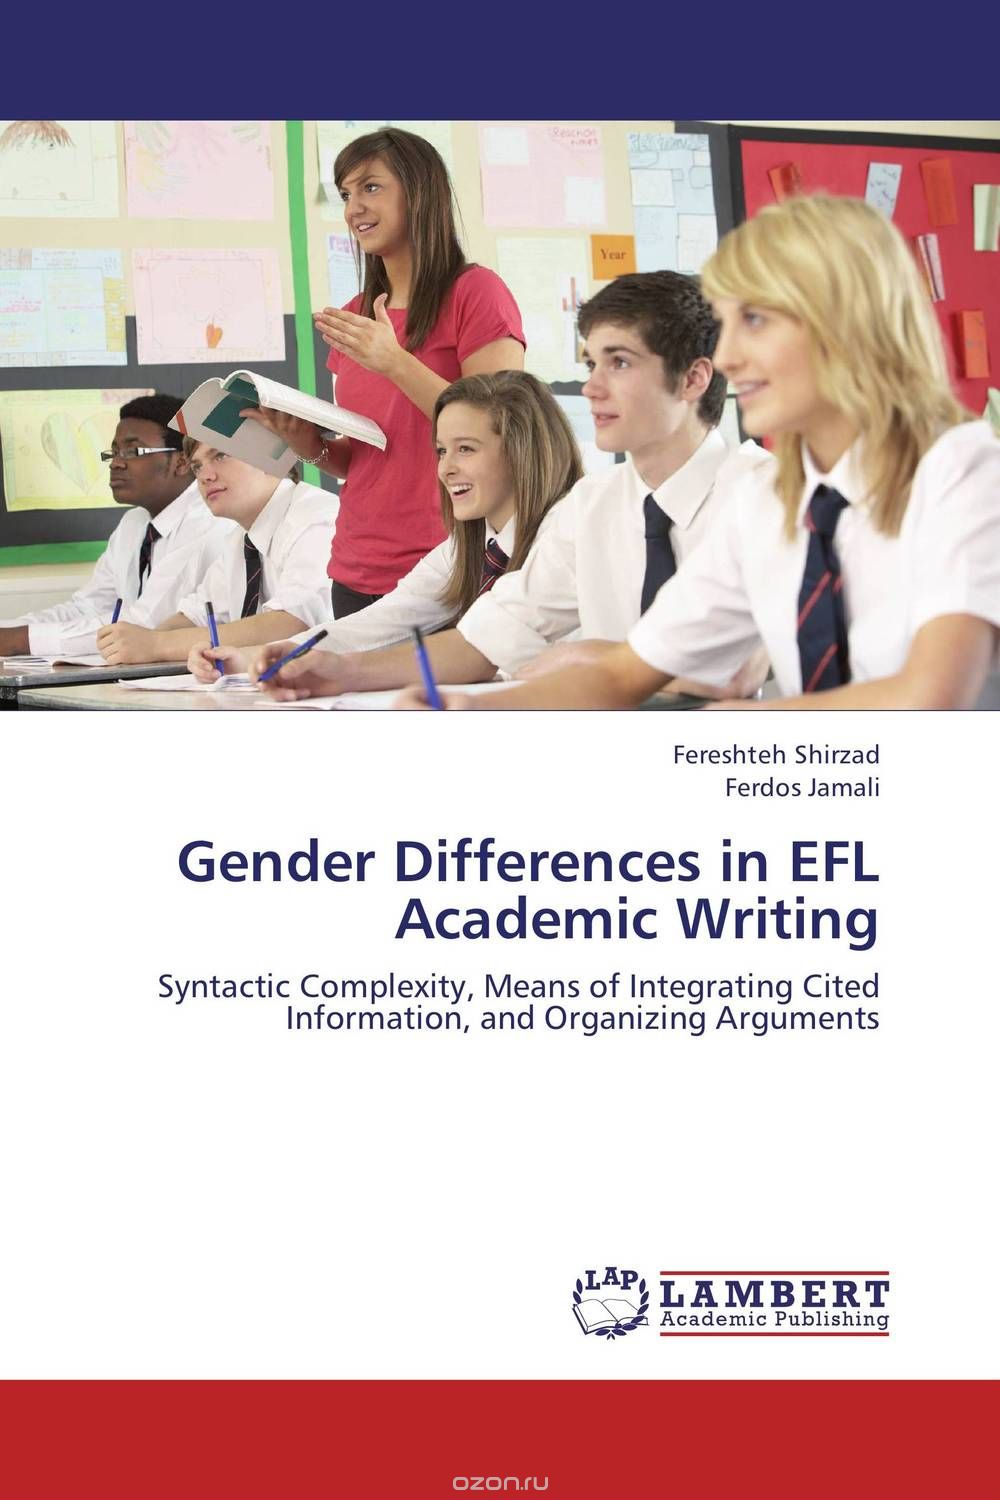 Скачать книгу "Gender Differences in EFL Academic Writing"